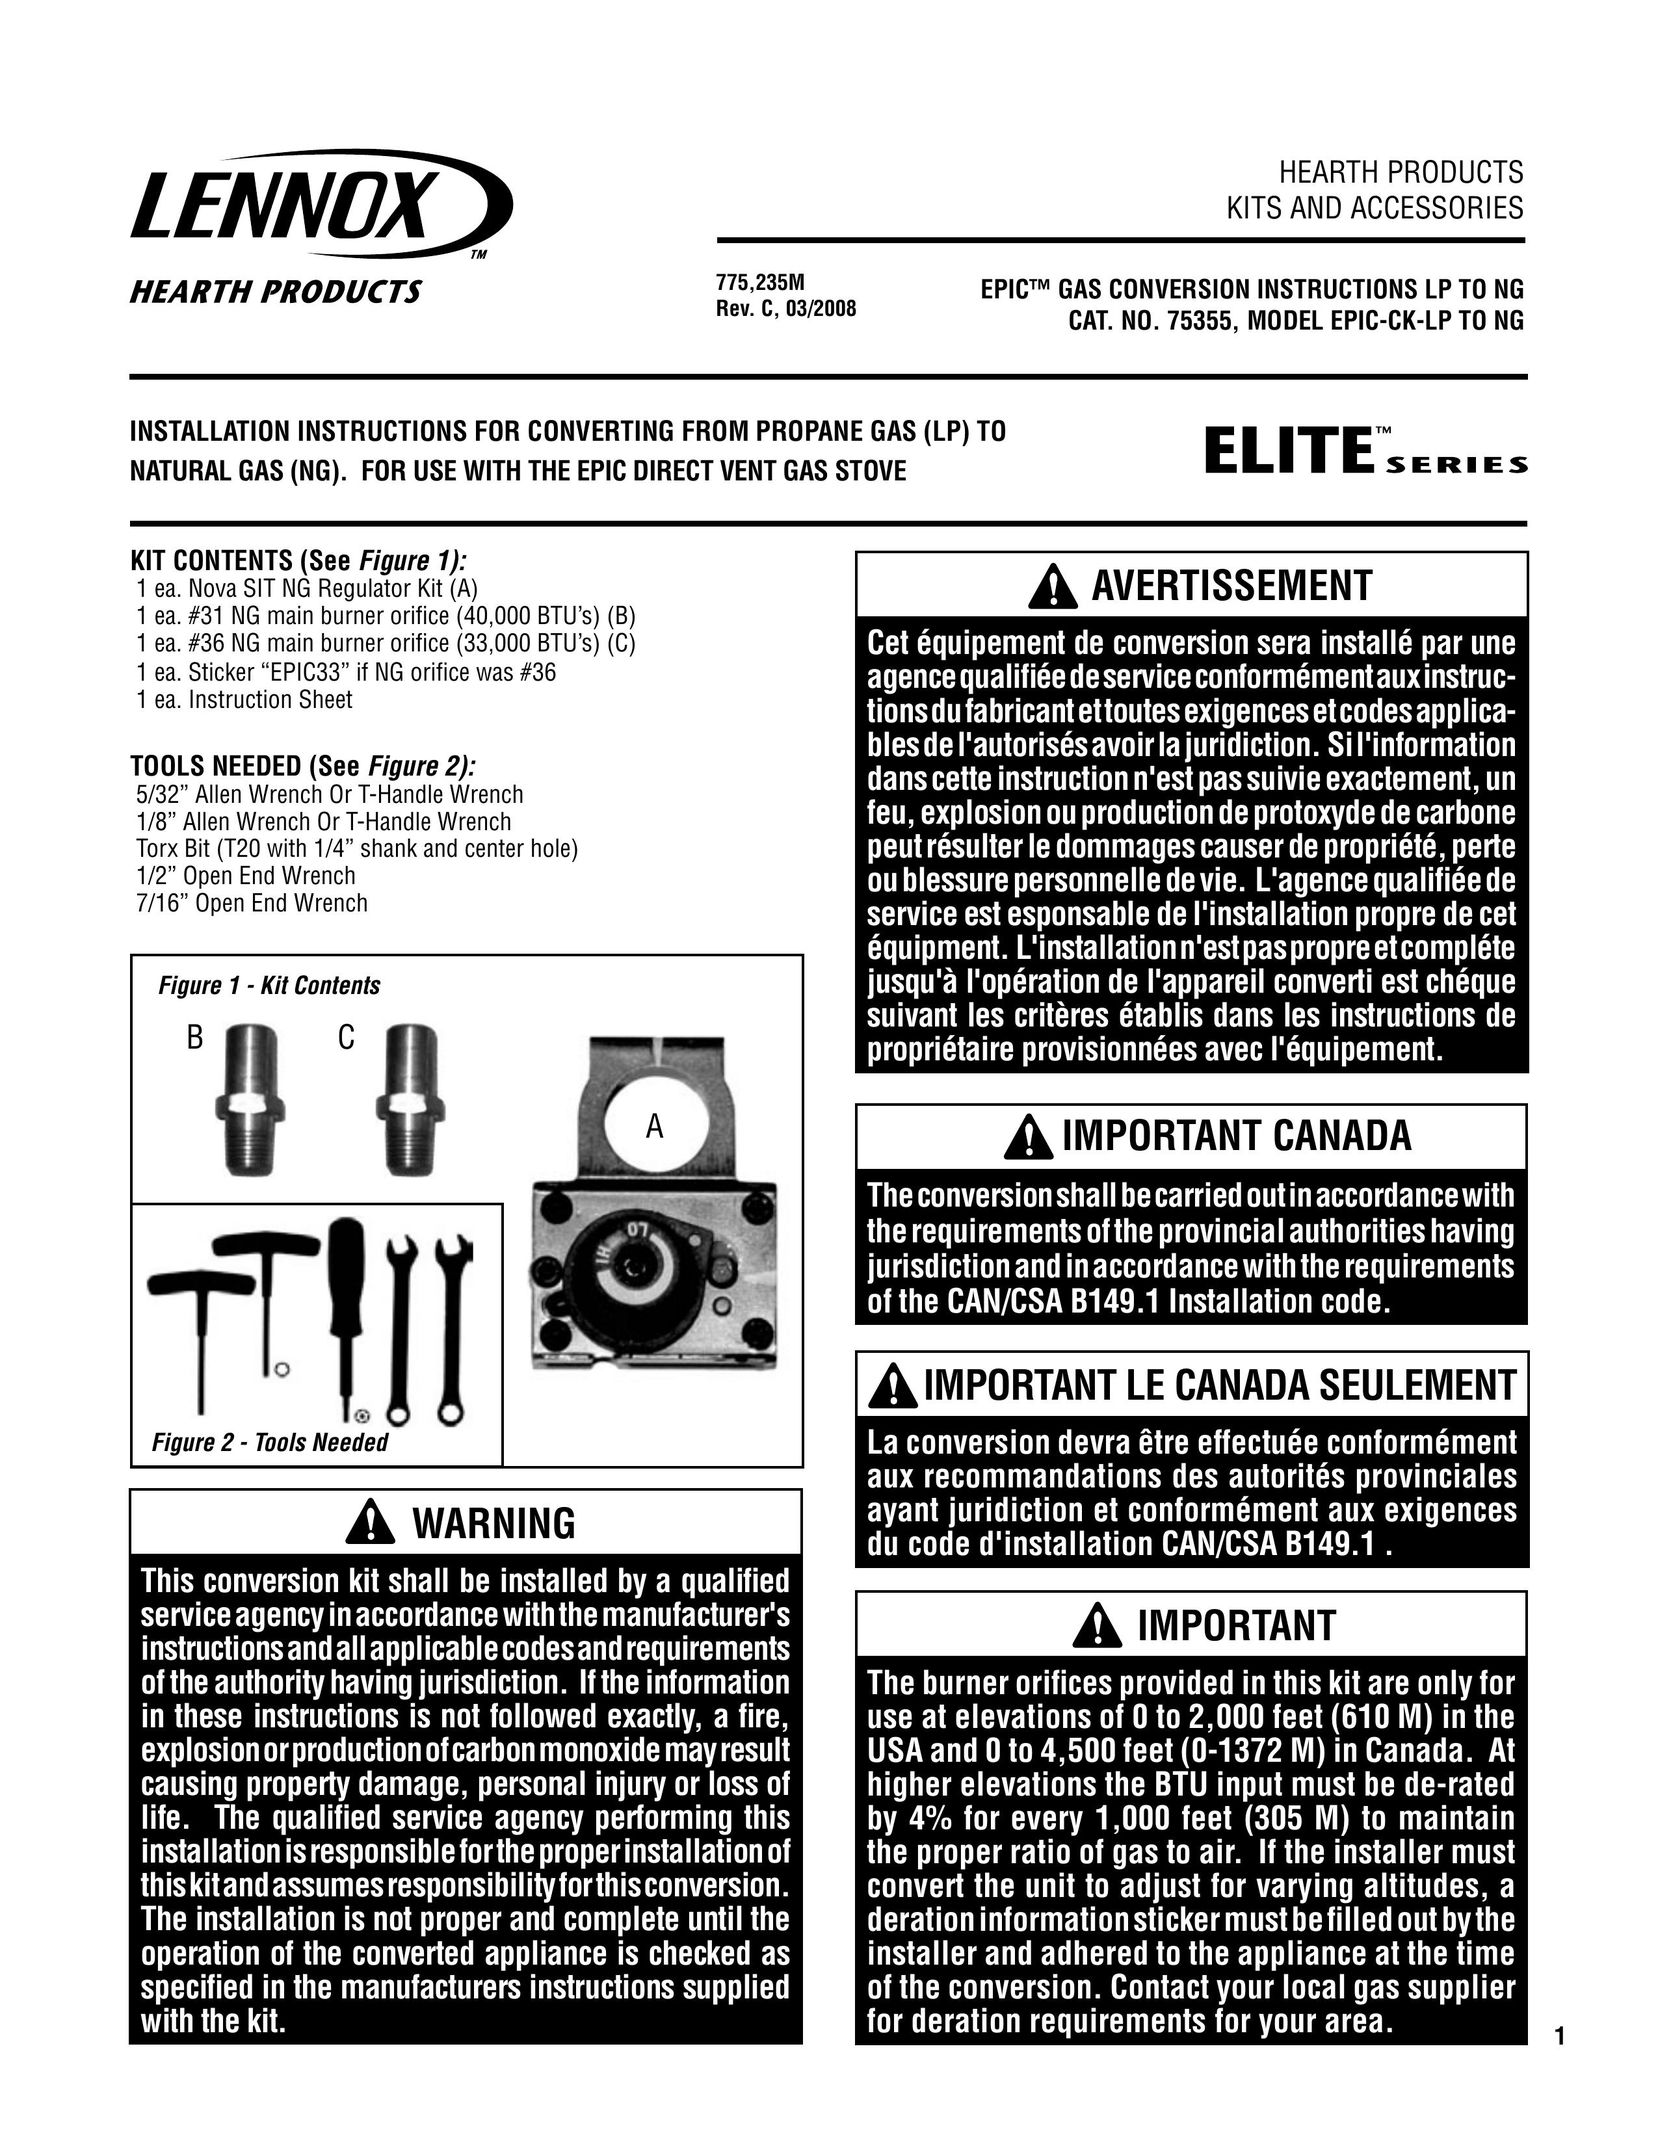 Lennox Hearth EPIC-CK-LP Stove User Manual